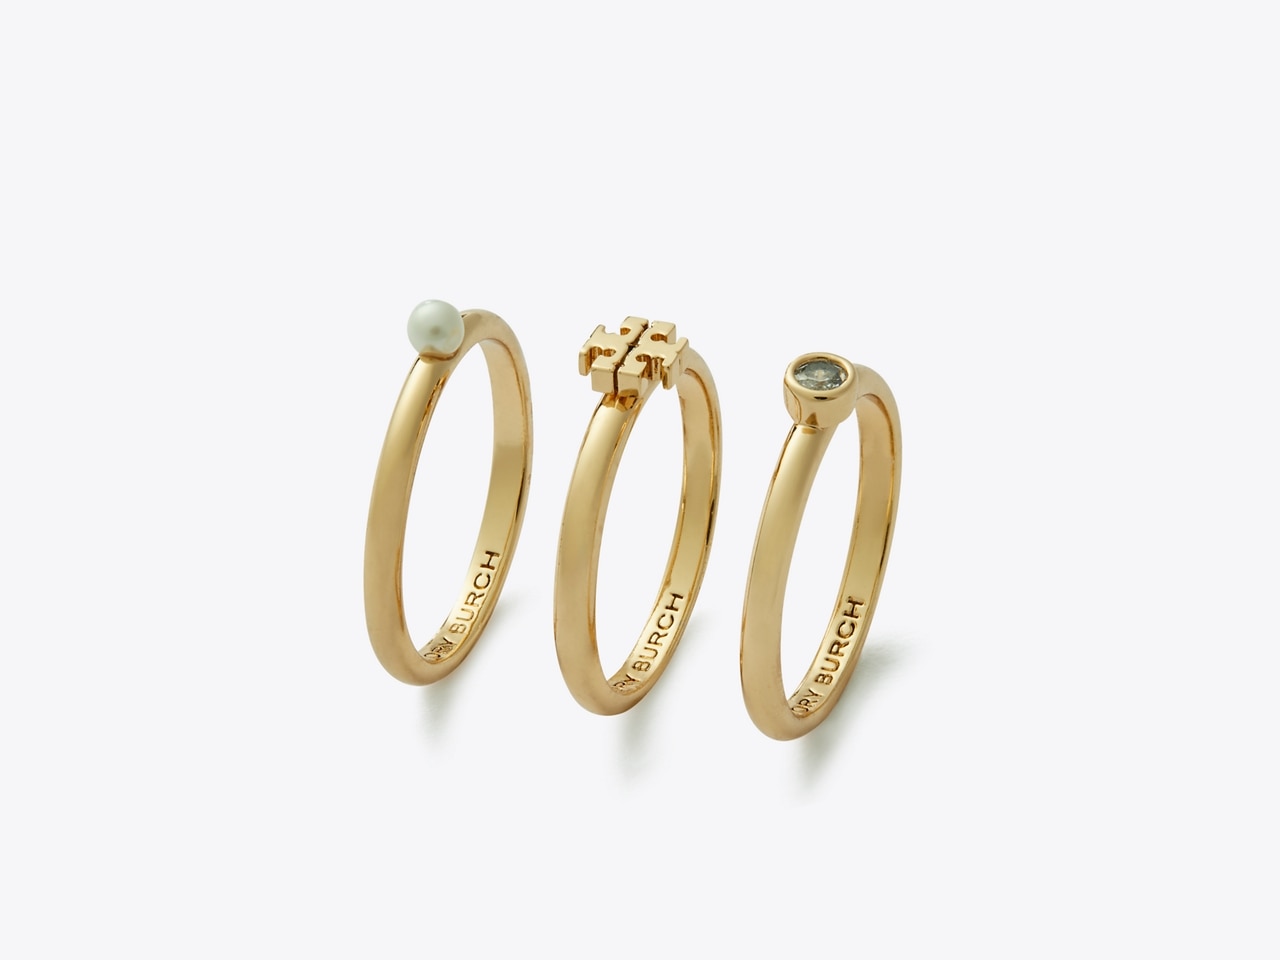 Tory Burch 'Kira' ring with logo, Women's Jewelery